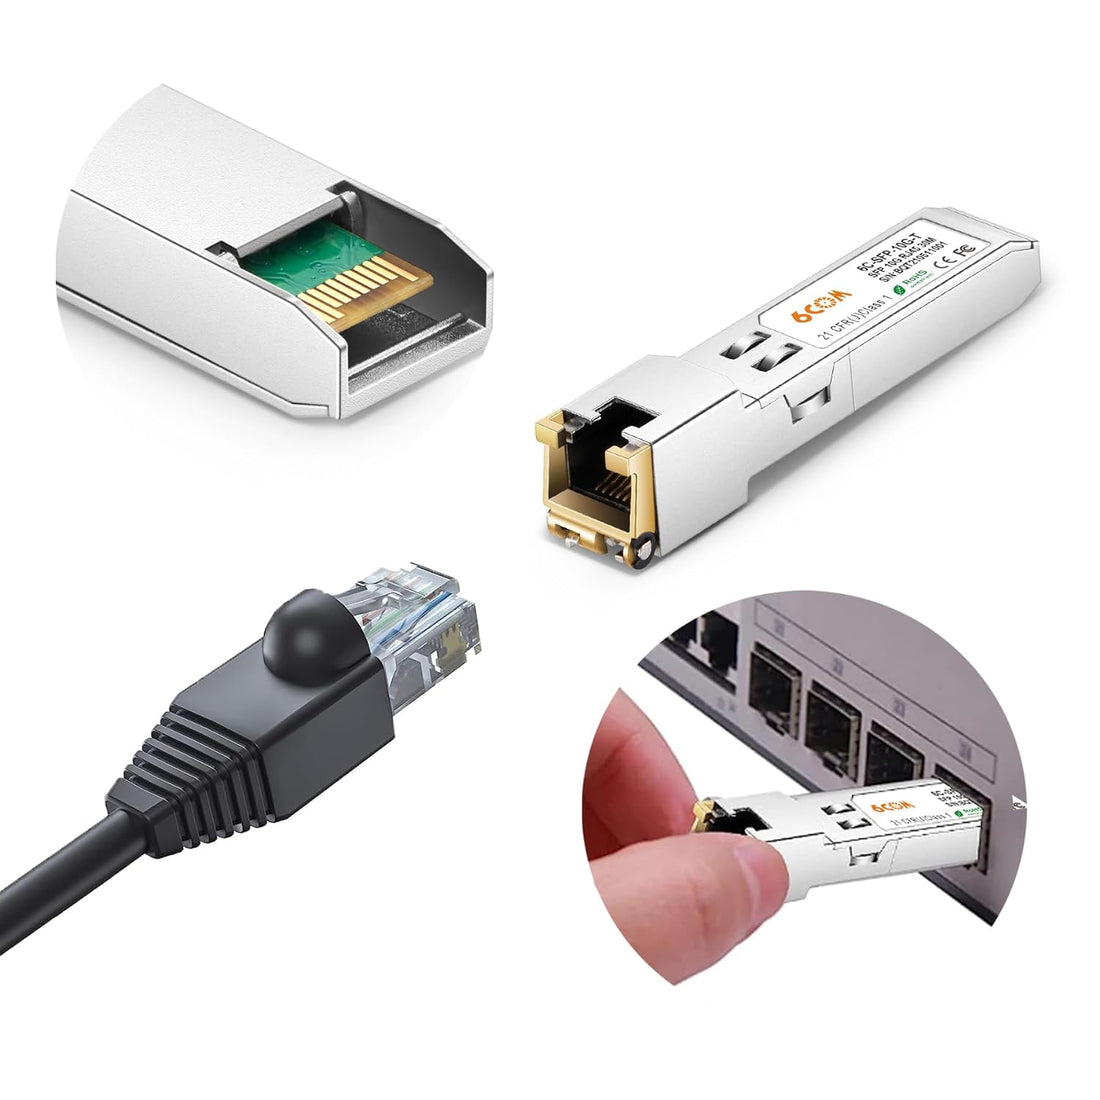 6COM SFP+ to RJ45 Copper Module 10GBase-T Transceiver for Cisco SFP-10G-T-S, Ubiquiti, D-Link, Supermicro, Netgear, Mikrotik, up to 30m